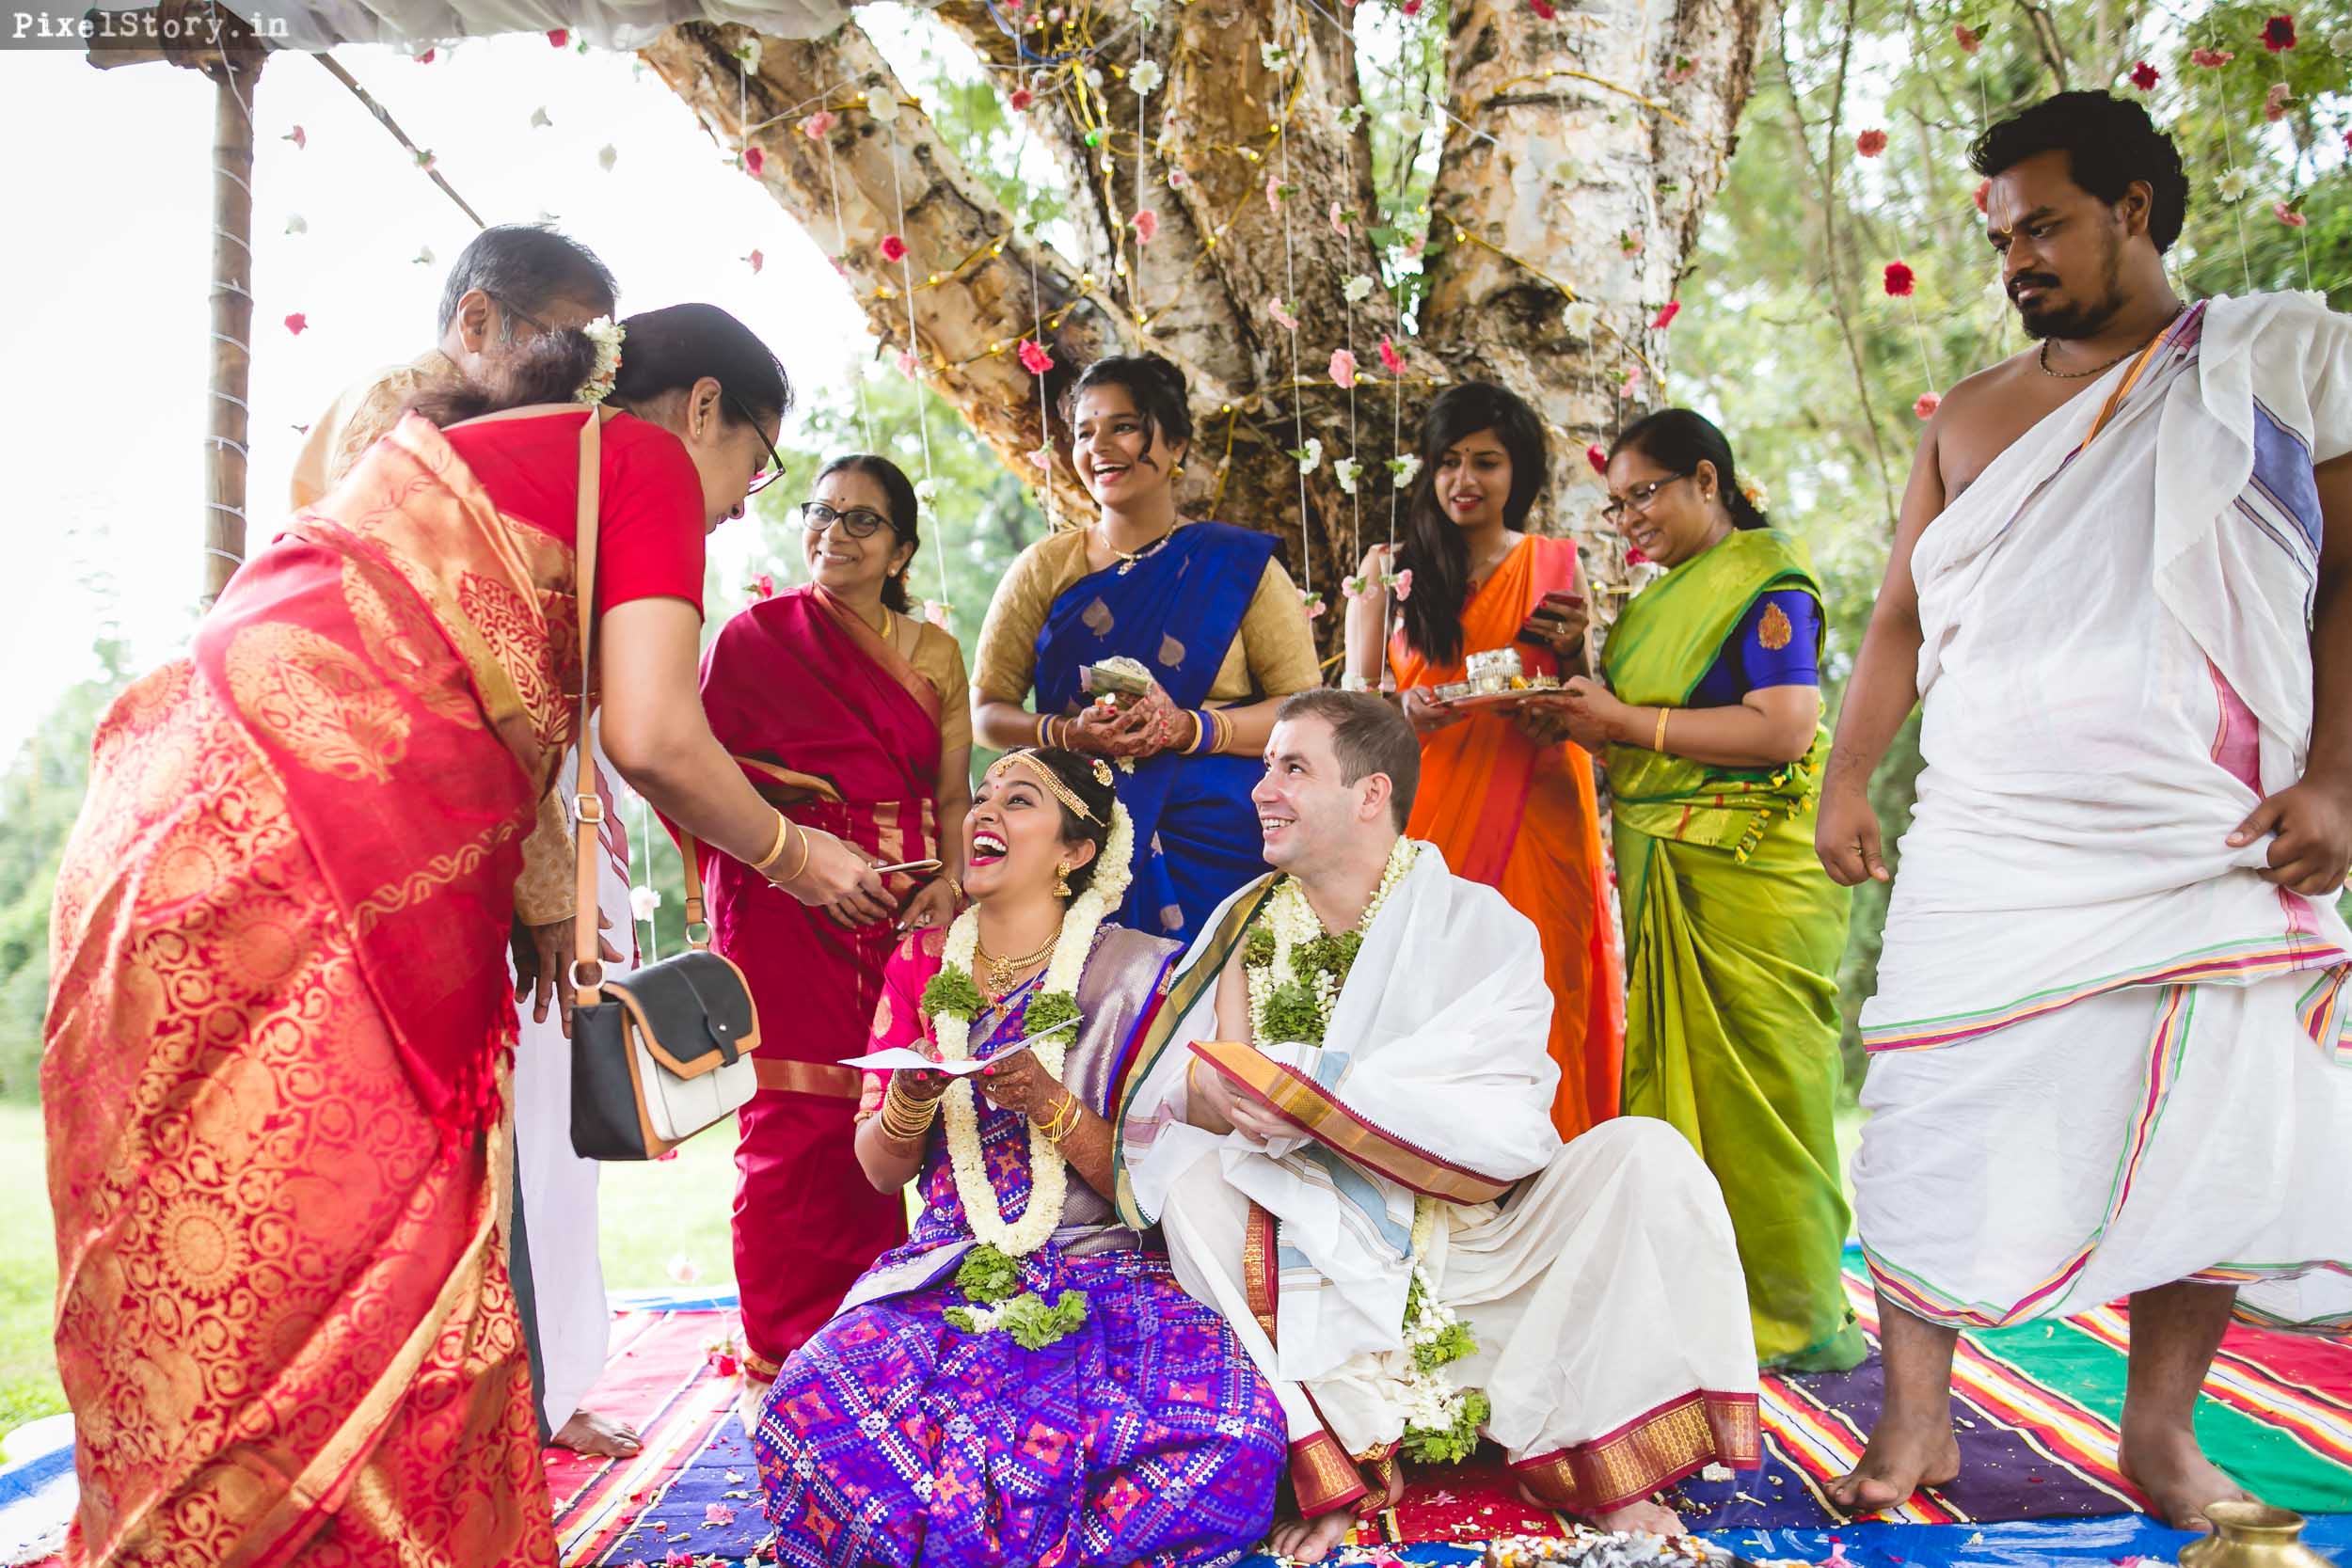 PixelStory-Jungle-Wedding-Photographer-Masinagudi-Indo-French081.jpg